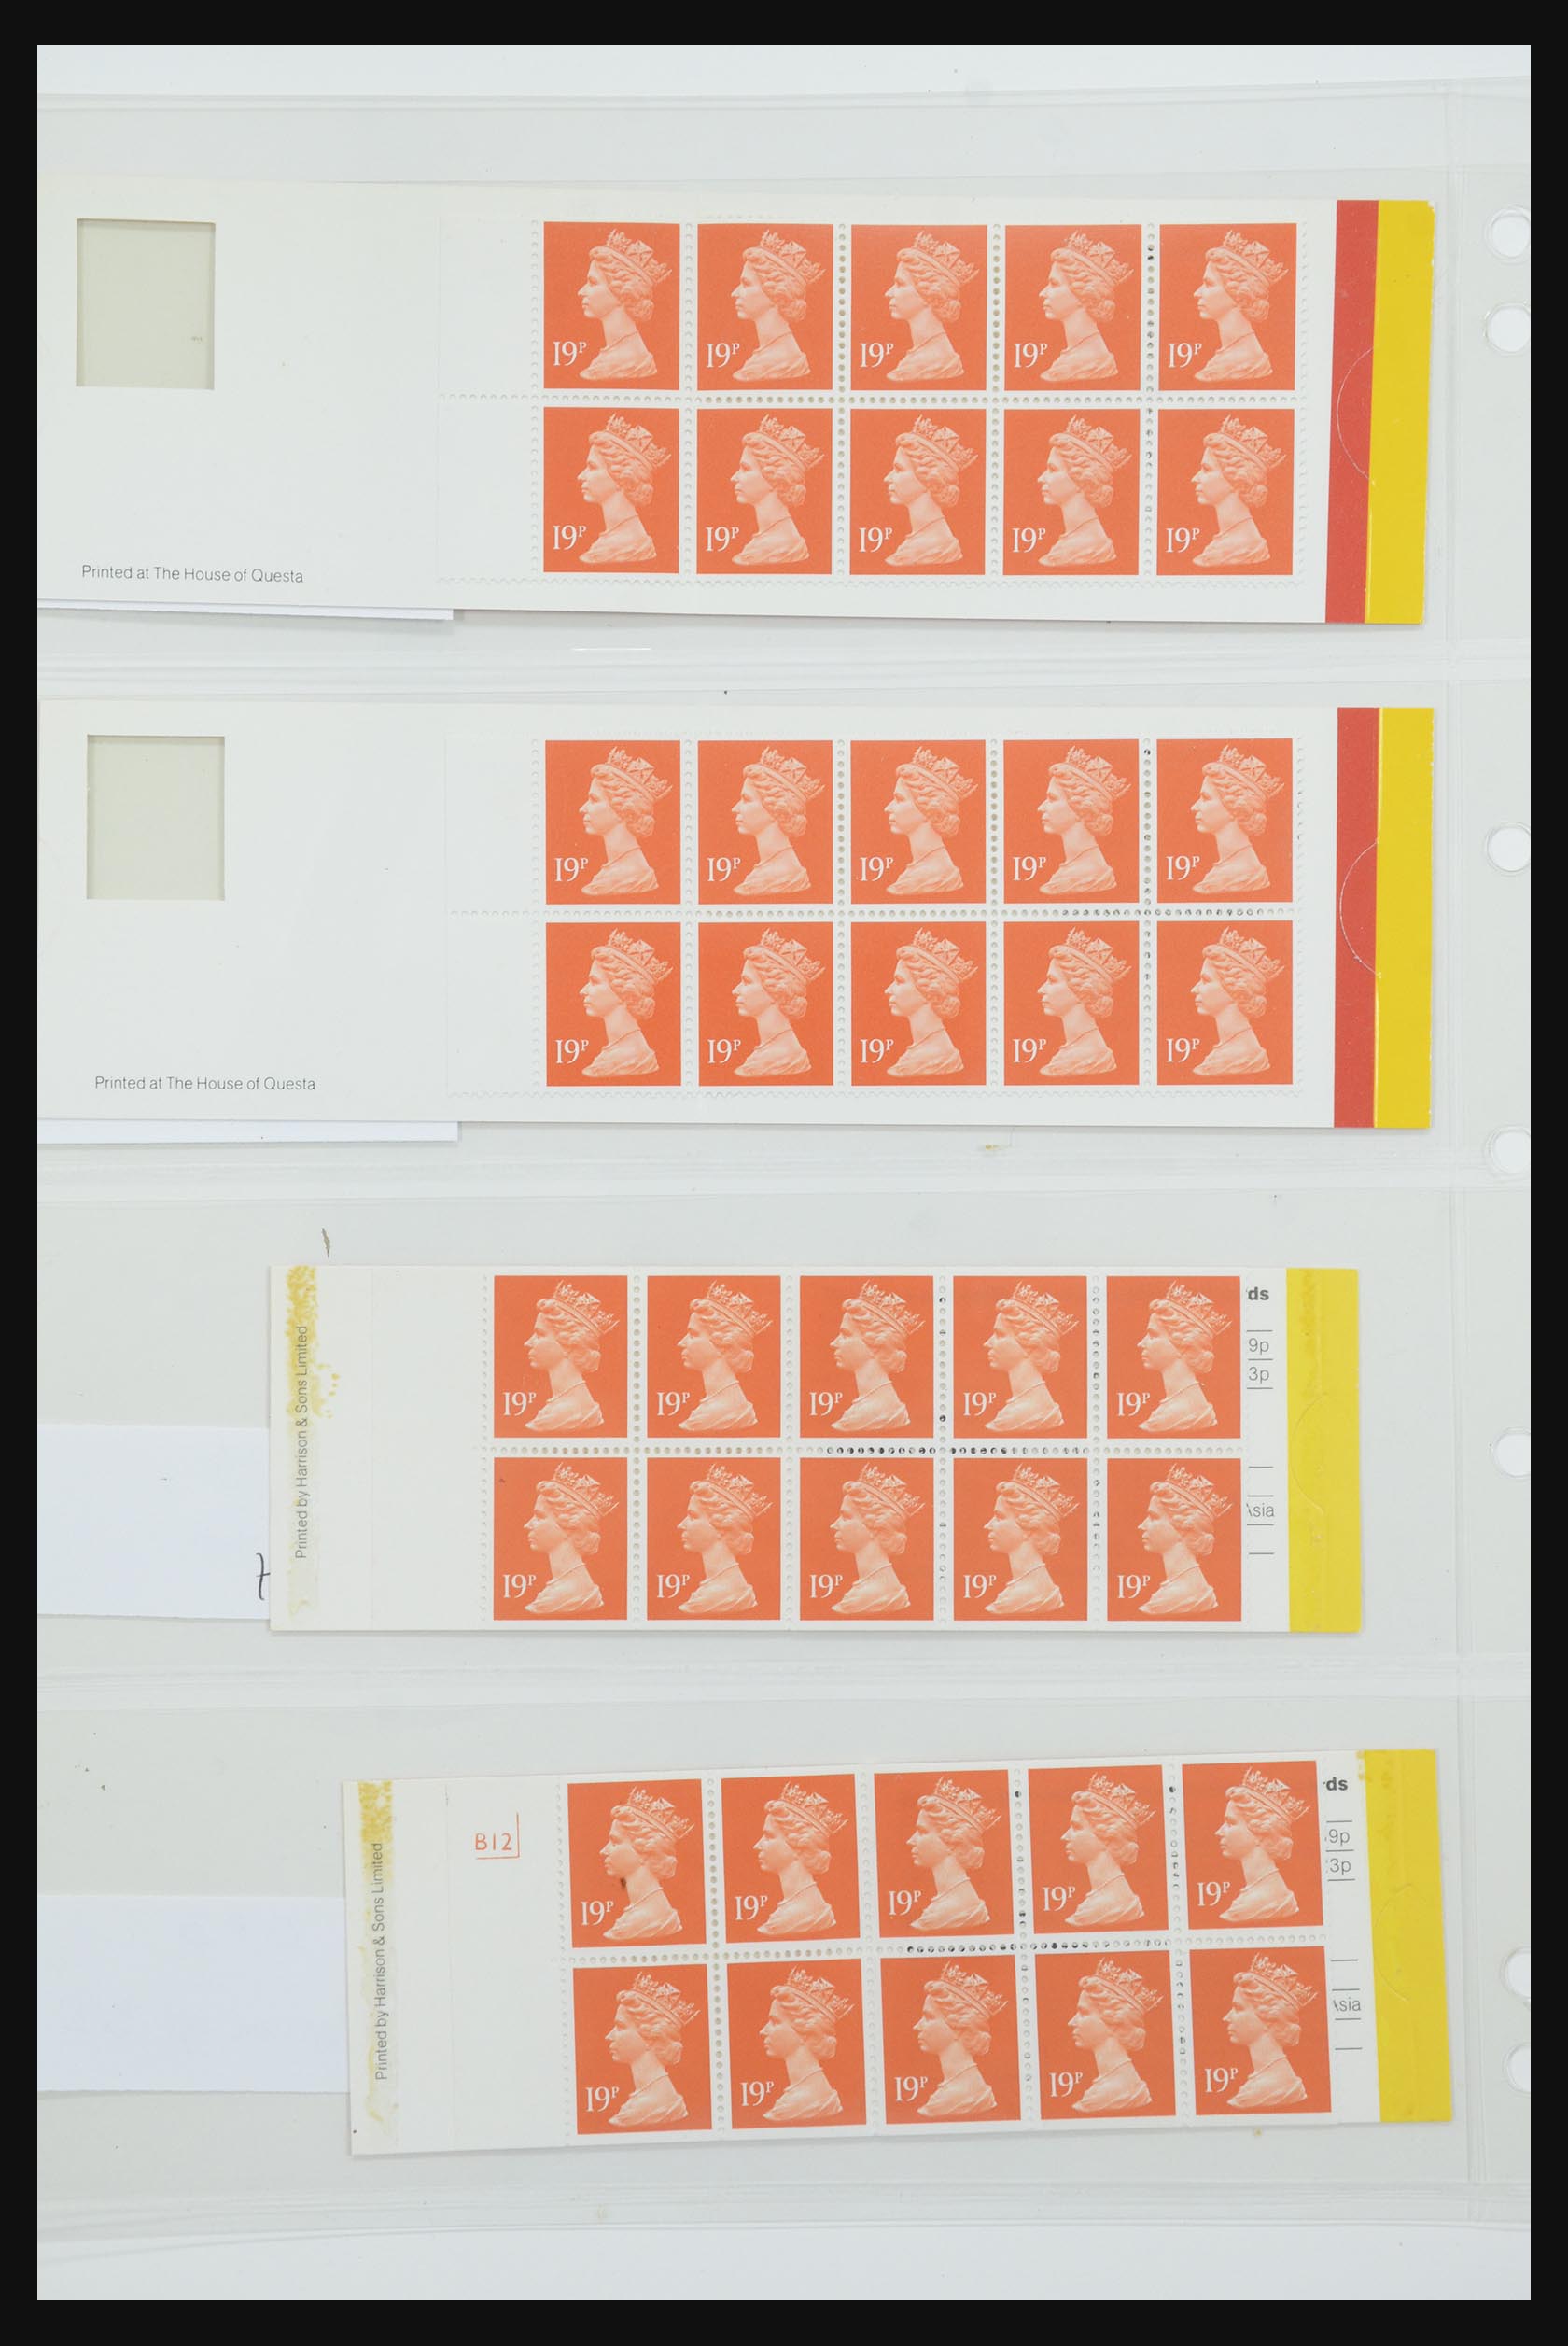 31959 072 - 31959 Great Britain stampbooklets 1987-2016!!